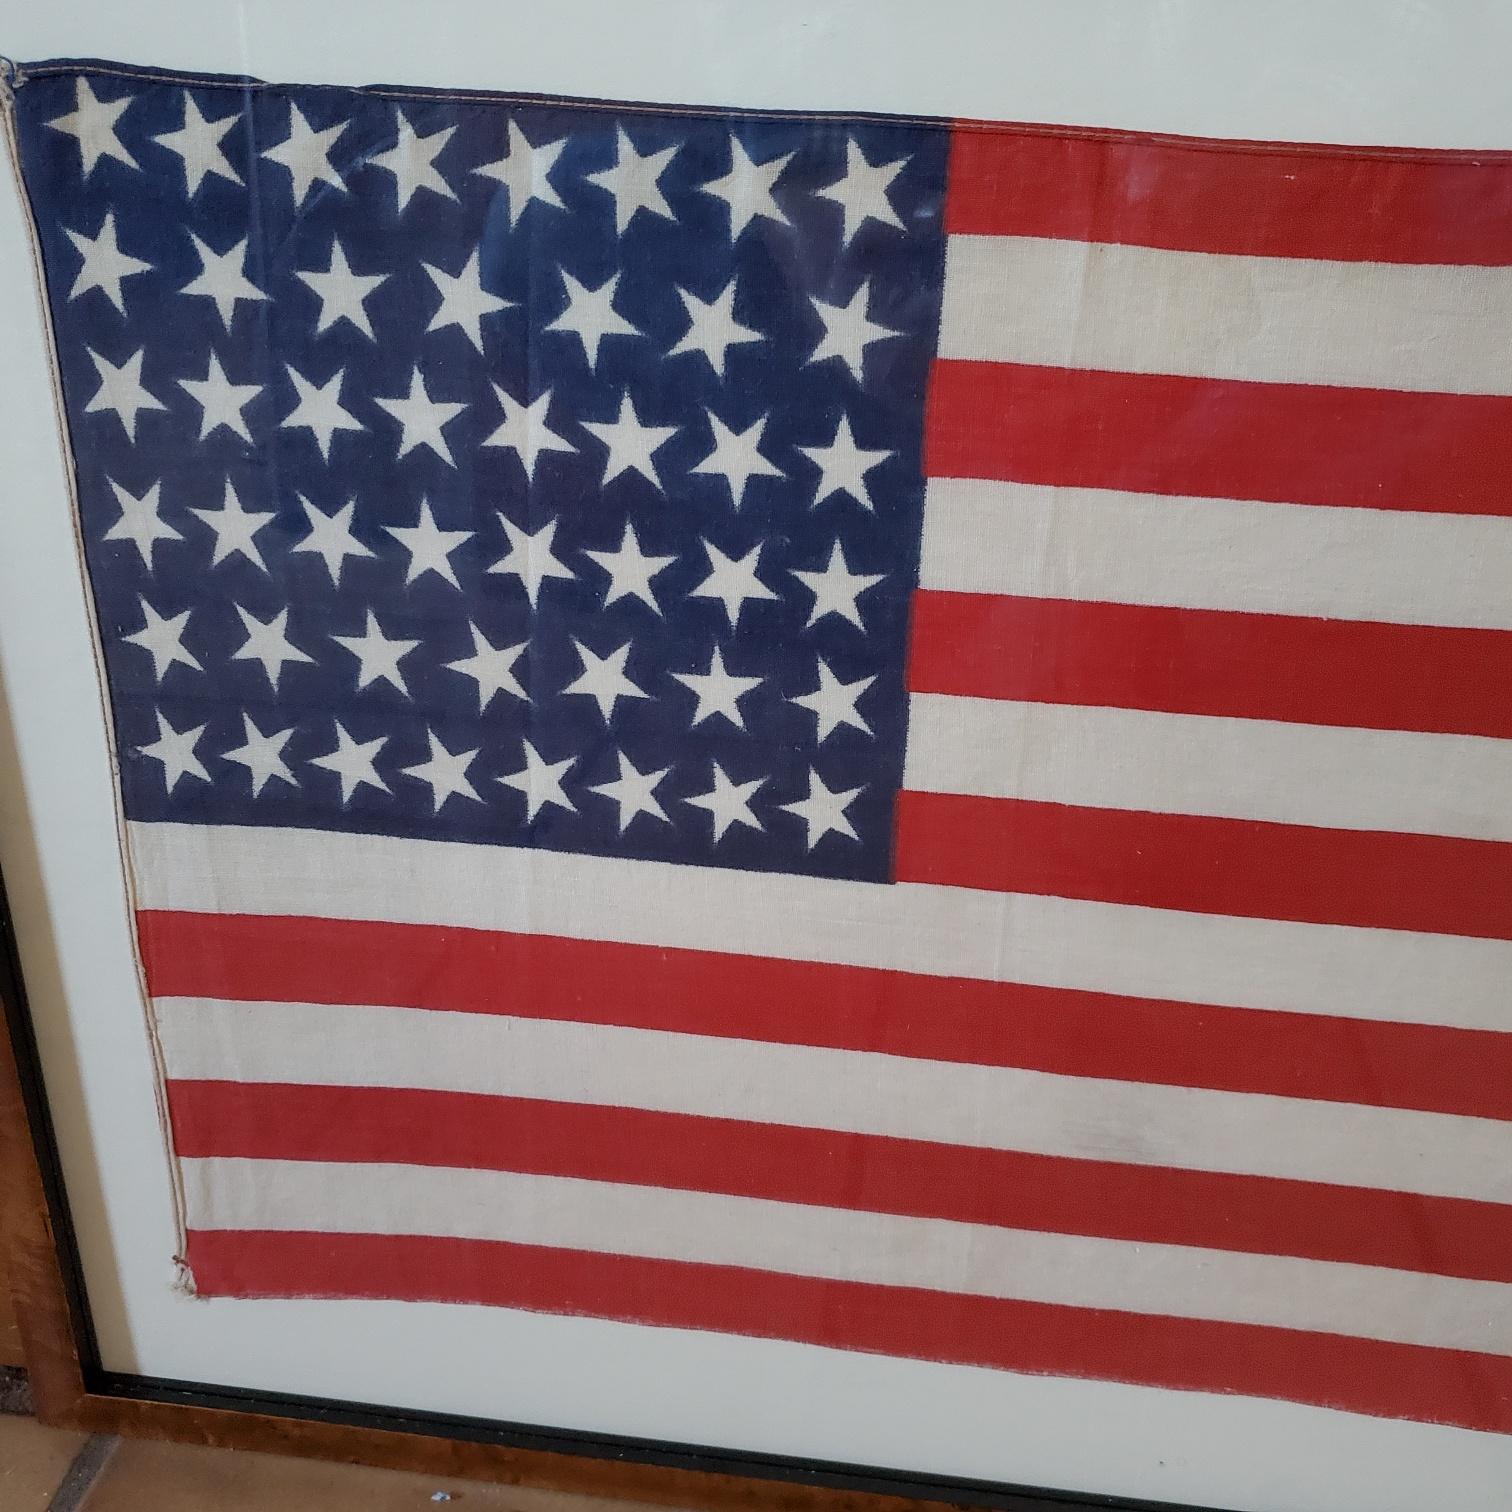 Antique American 46 Star Flag, circa 1908, a period linen flag made in the 